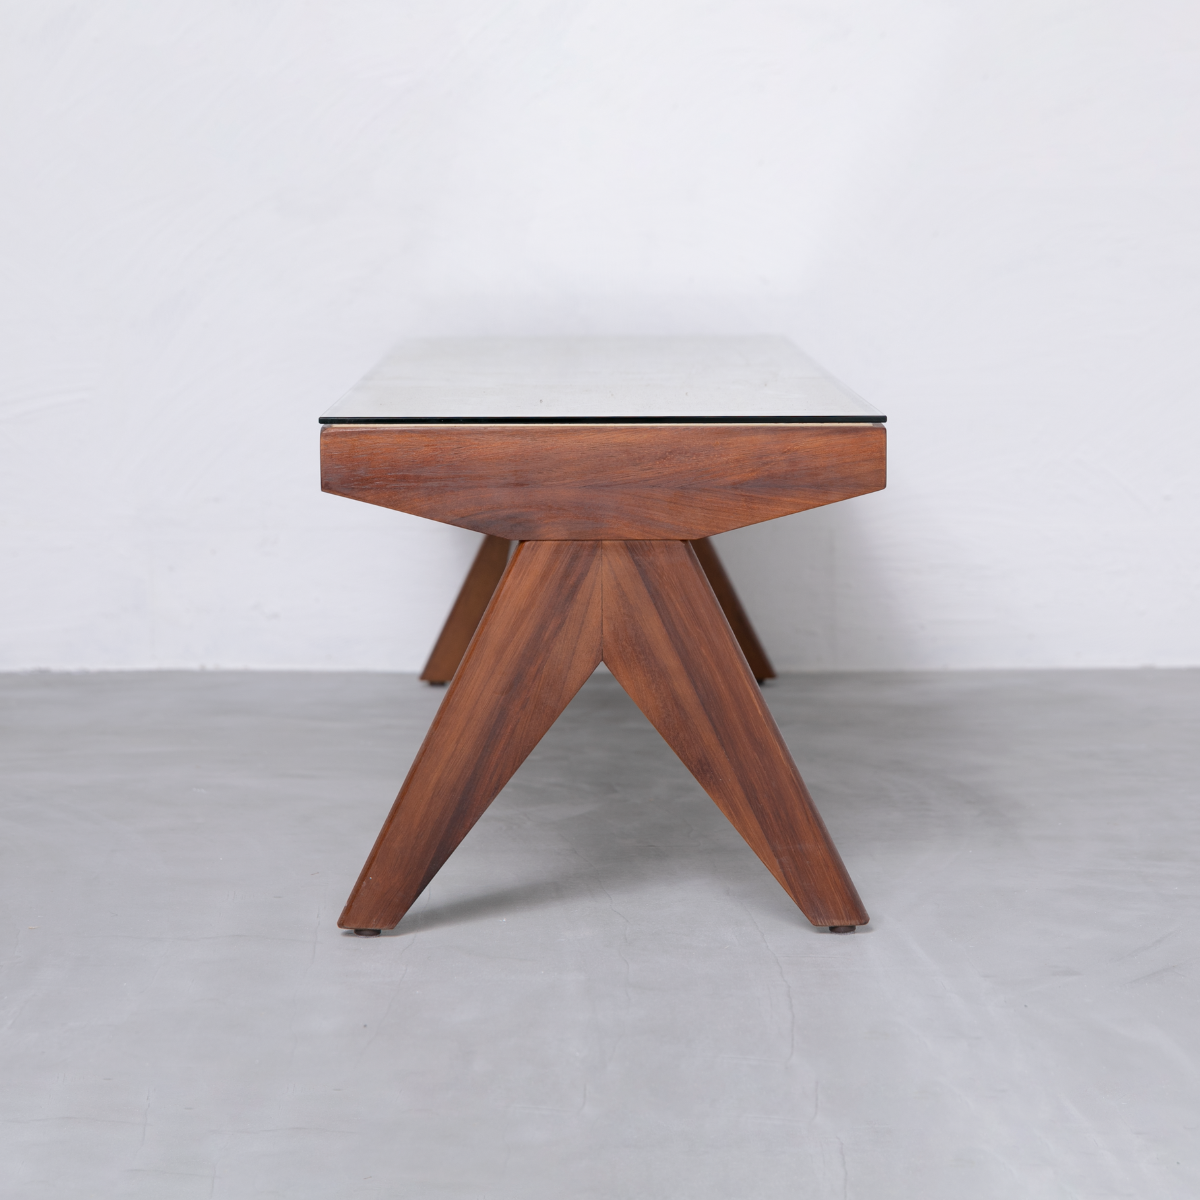 Teak bench PH33（Original Table）/ チークベンチテーブル